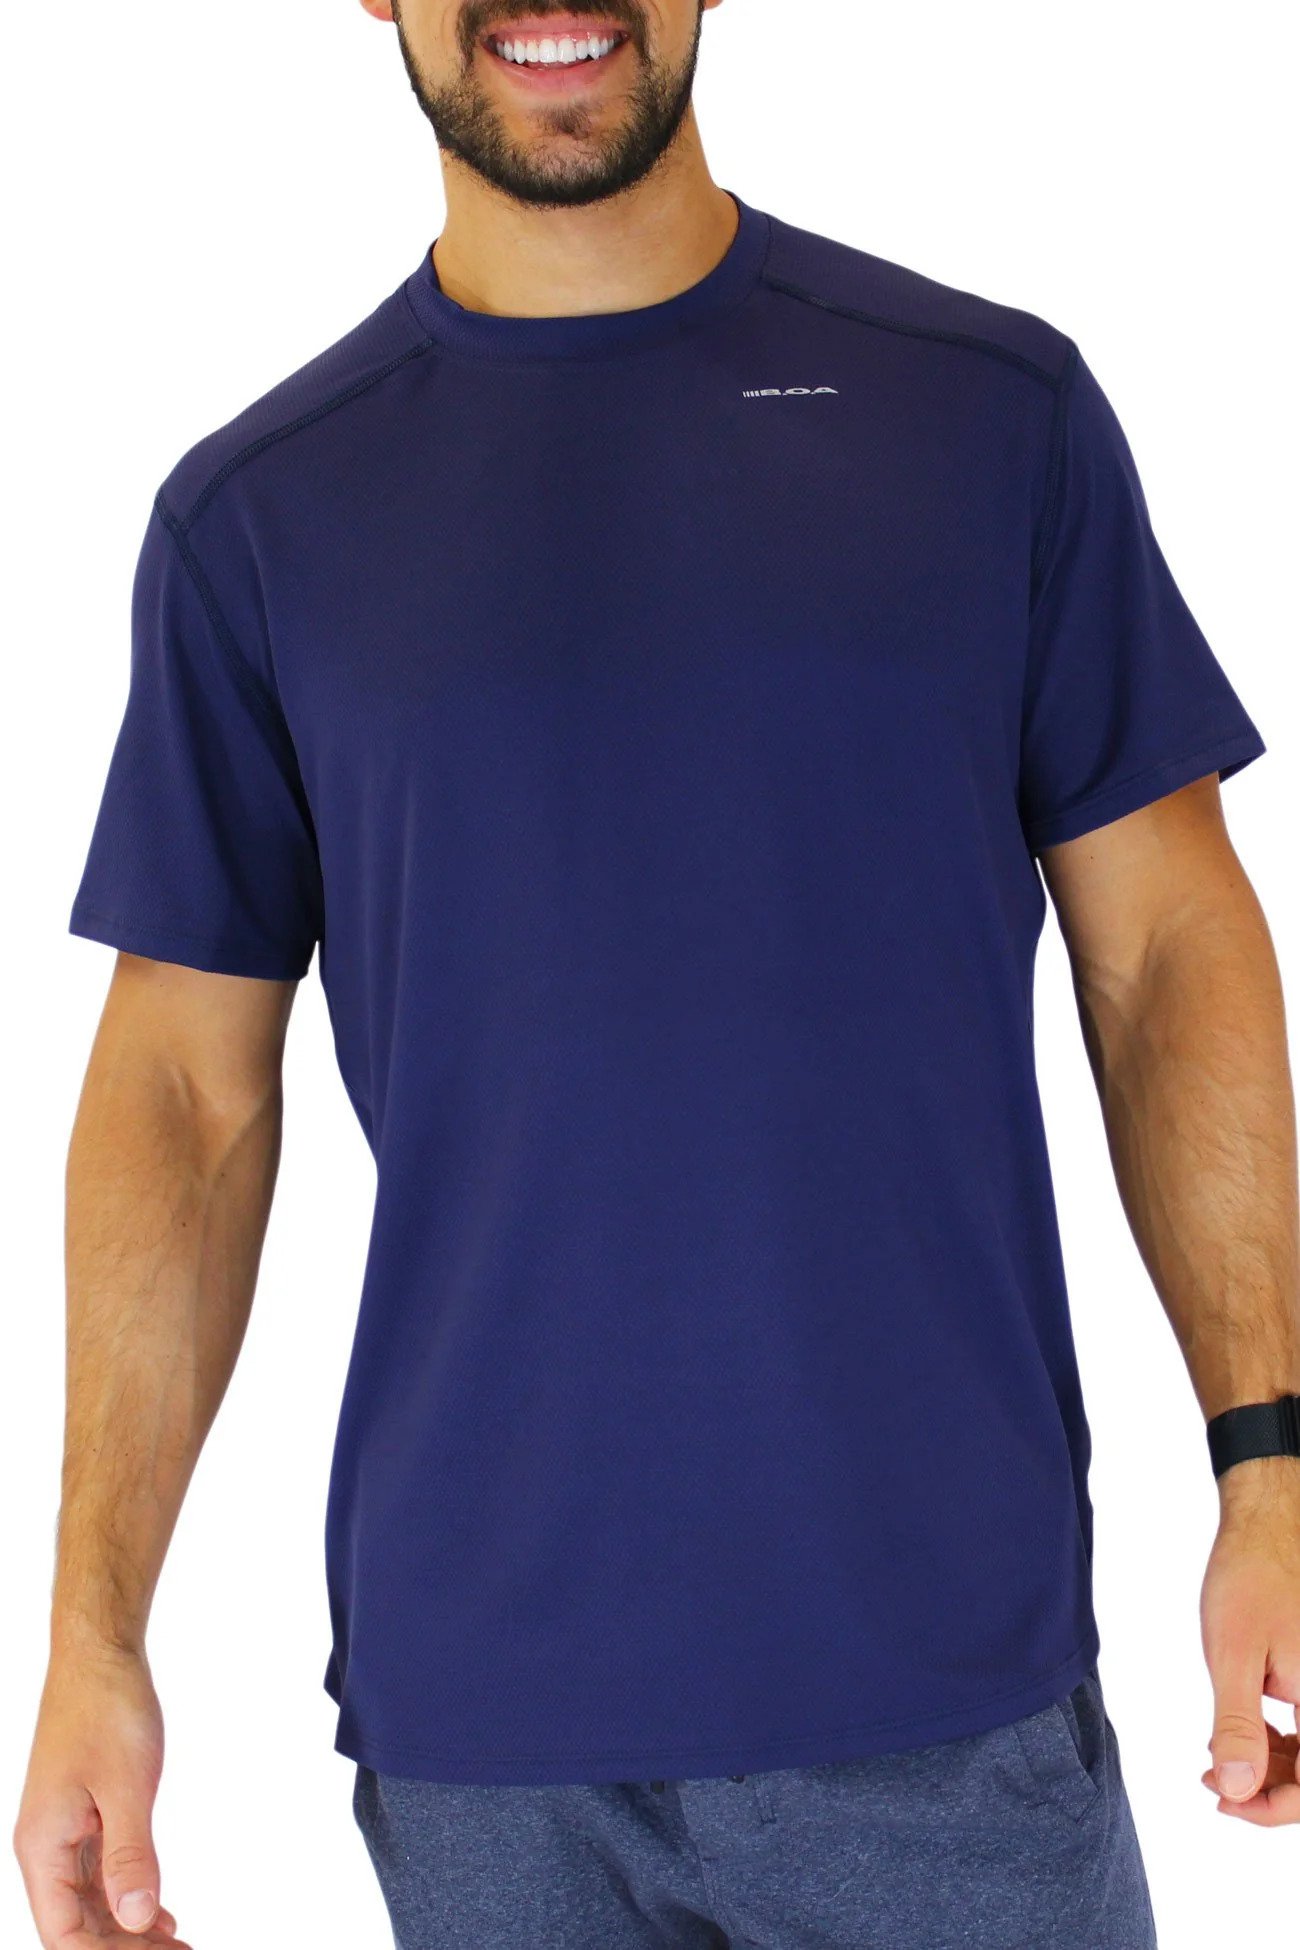 Boa Men's Navy Versatex Canyon Shirt